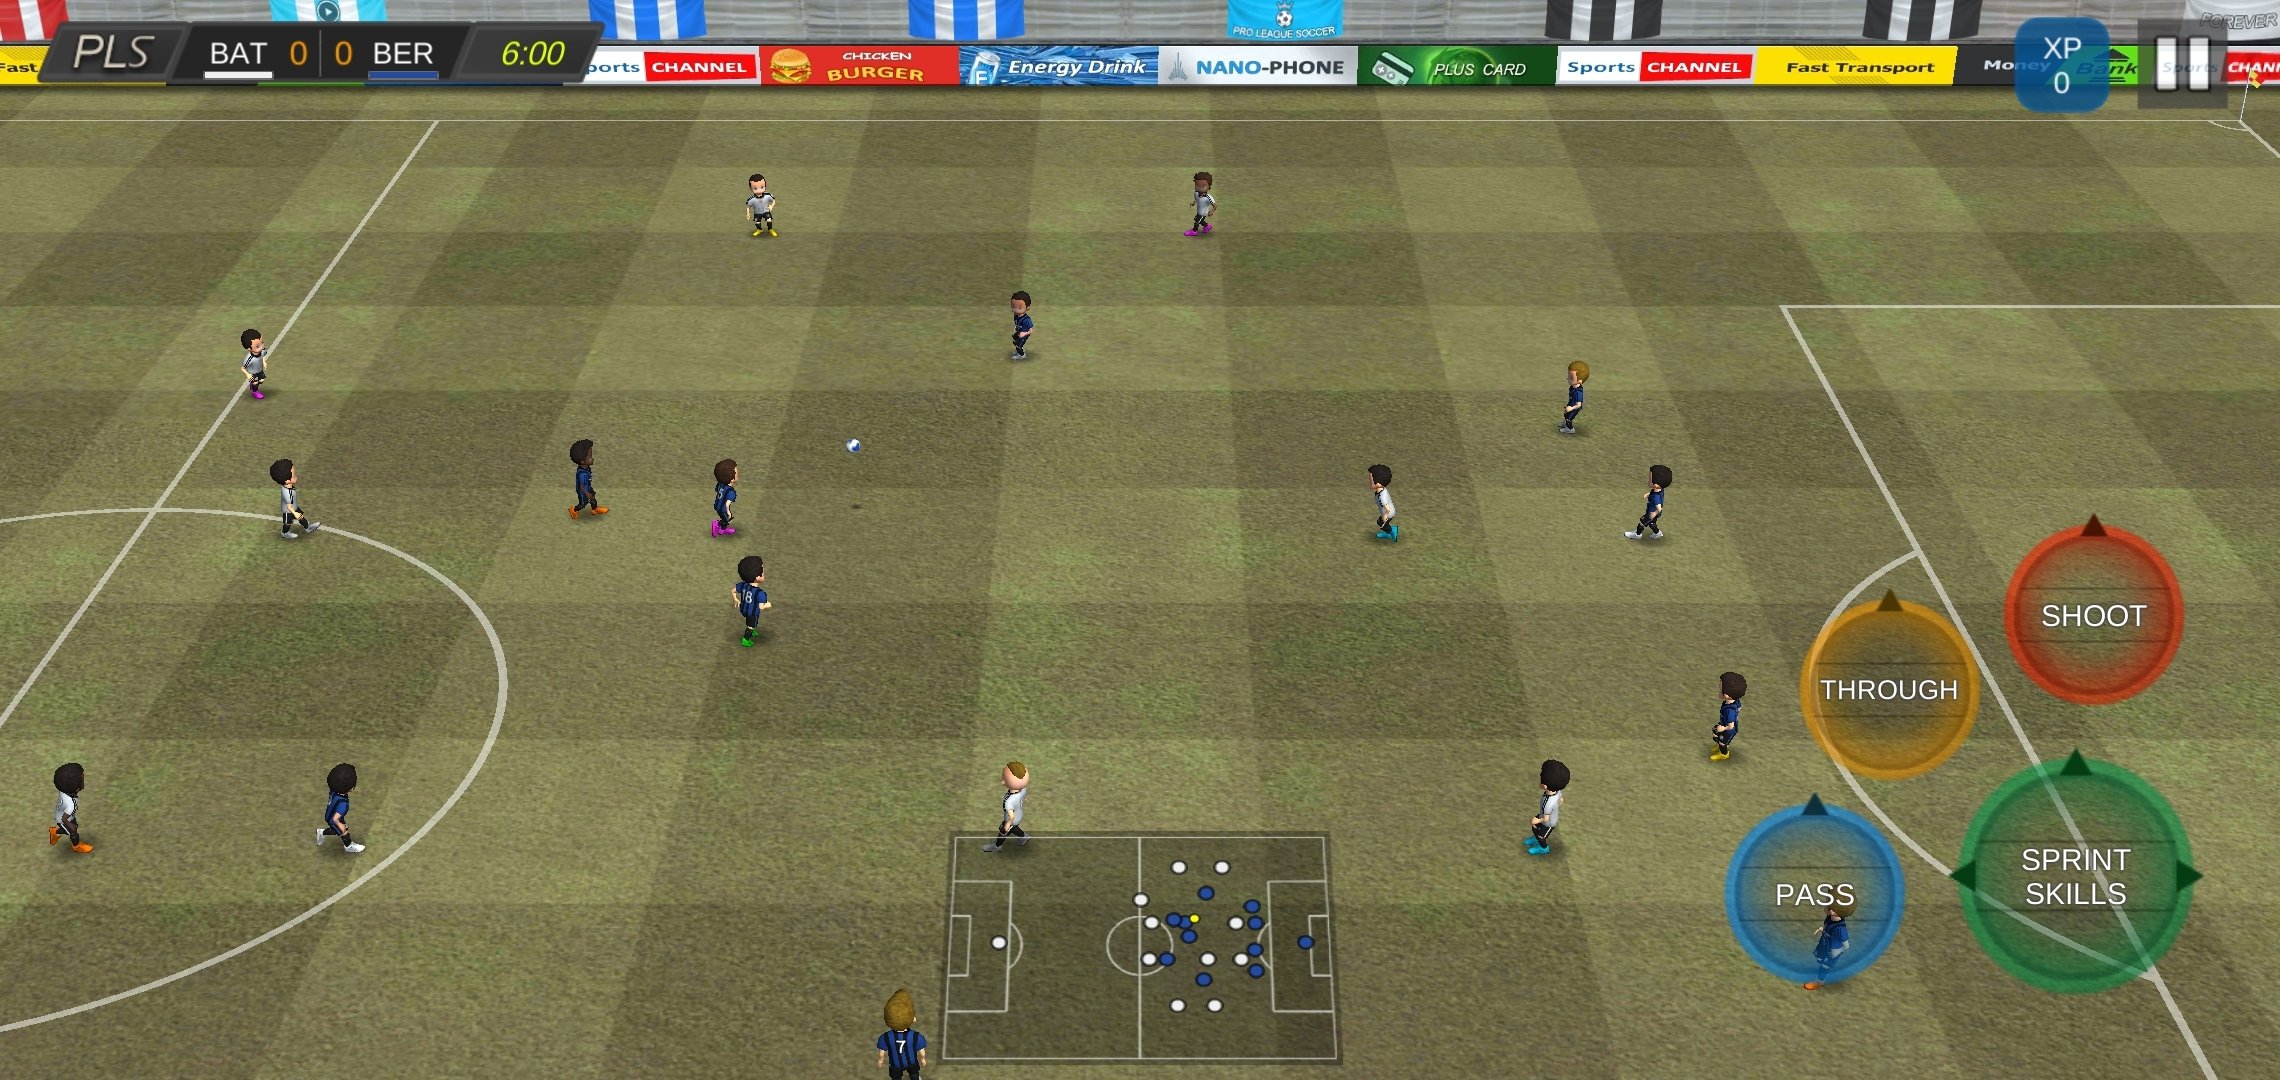 Pro League Soccer - Jogo offline para Android - Mobile Gamer